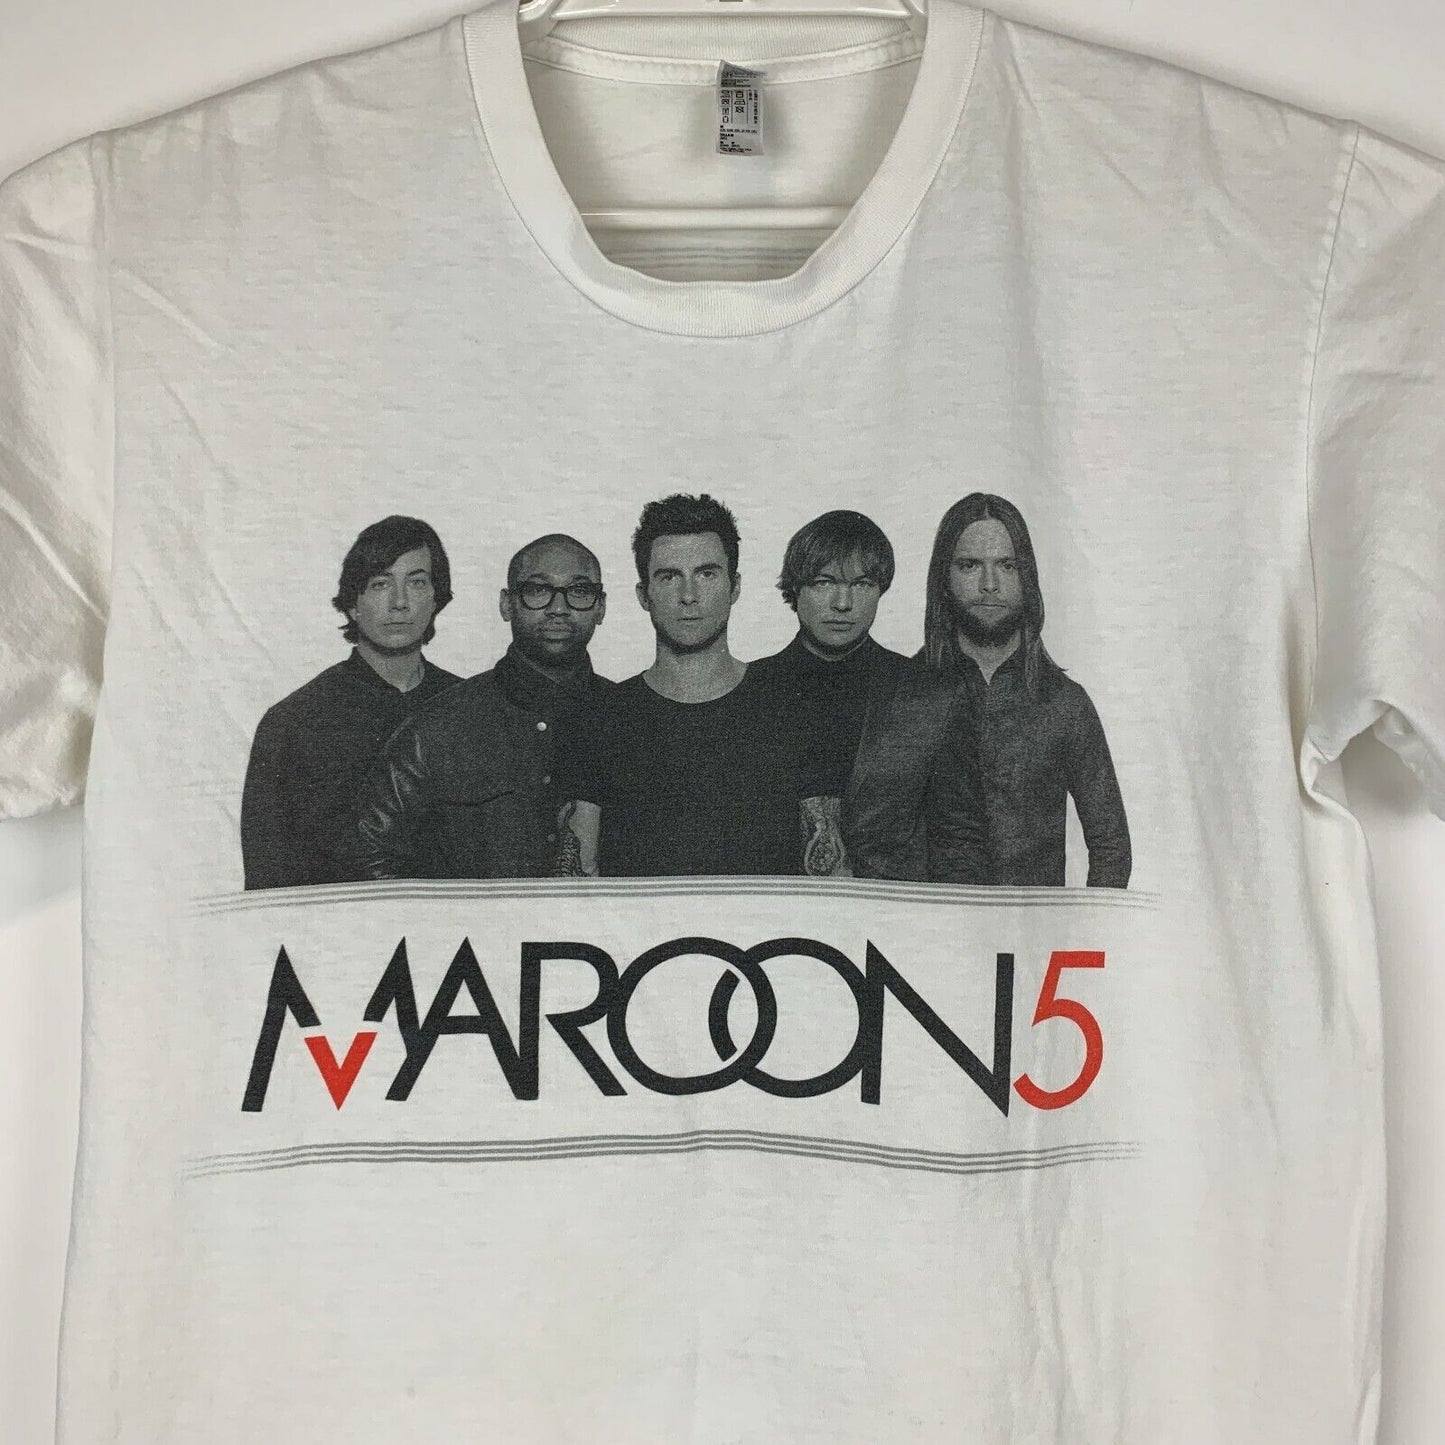 Maroon 5 Las Vegas 2013 Tour T Shirt Pop Rock Band Concert Made In USA Medium